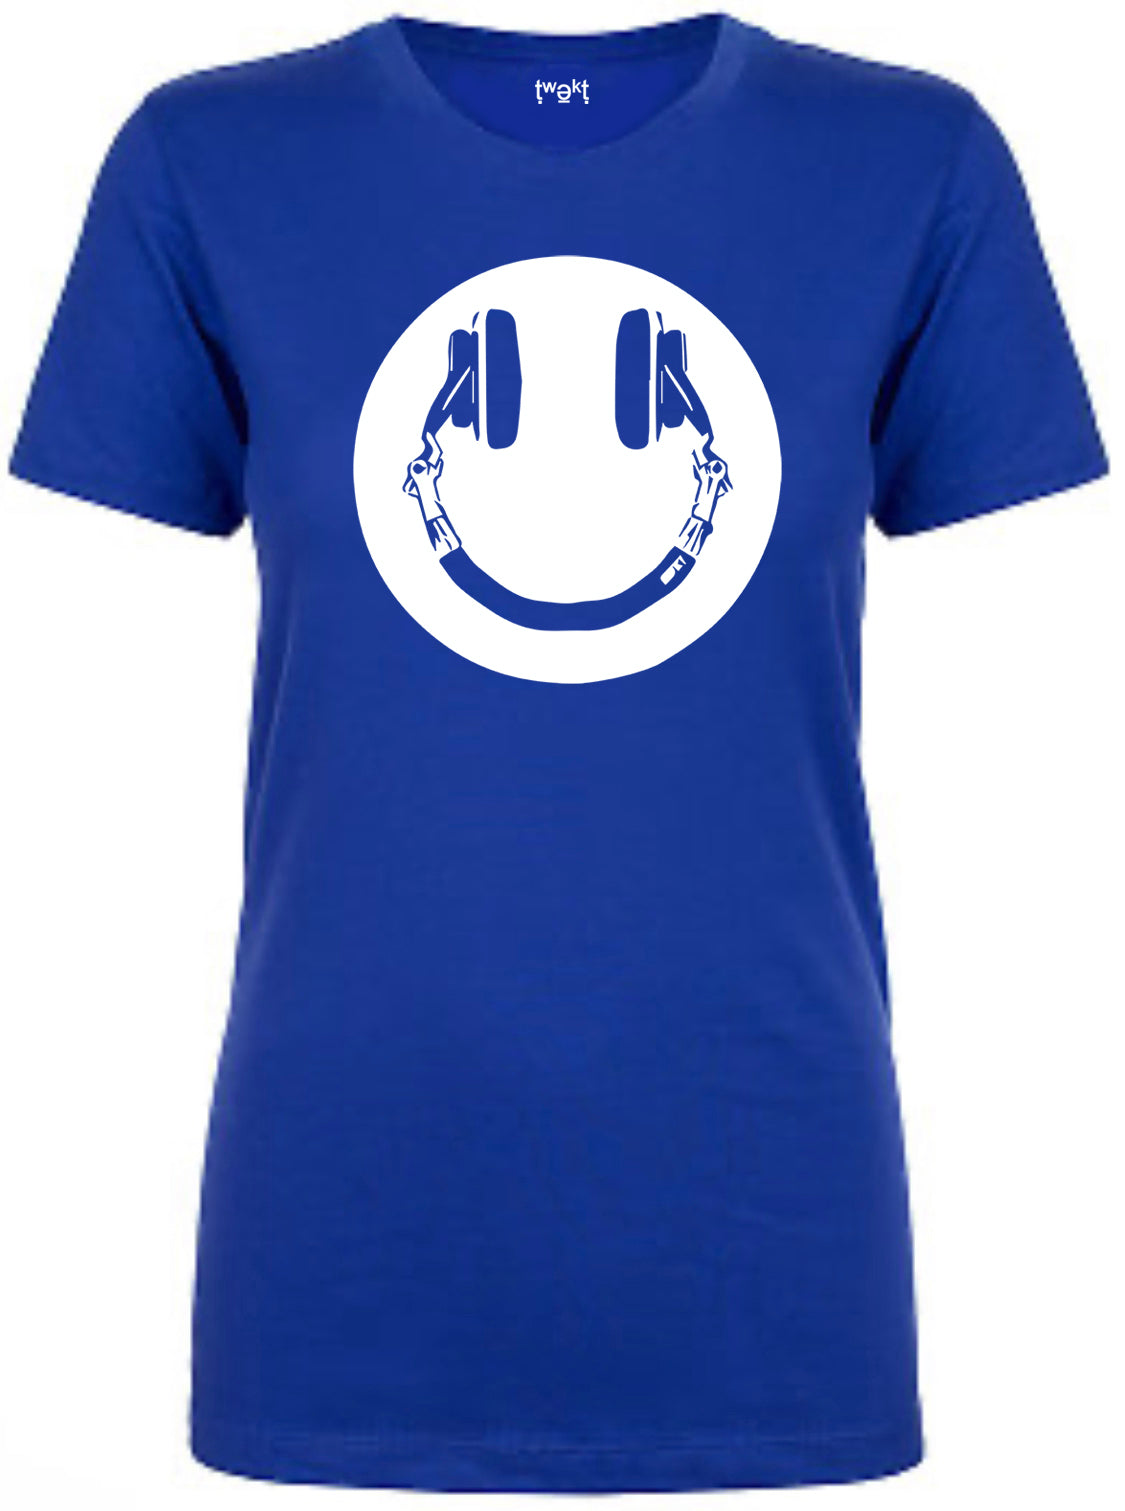 Smiley Women T-shirt